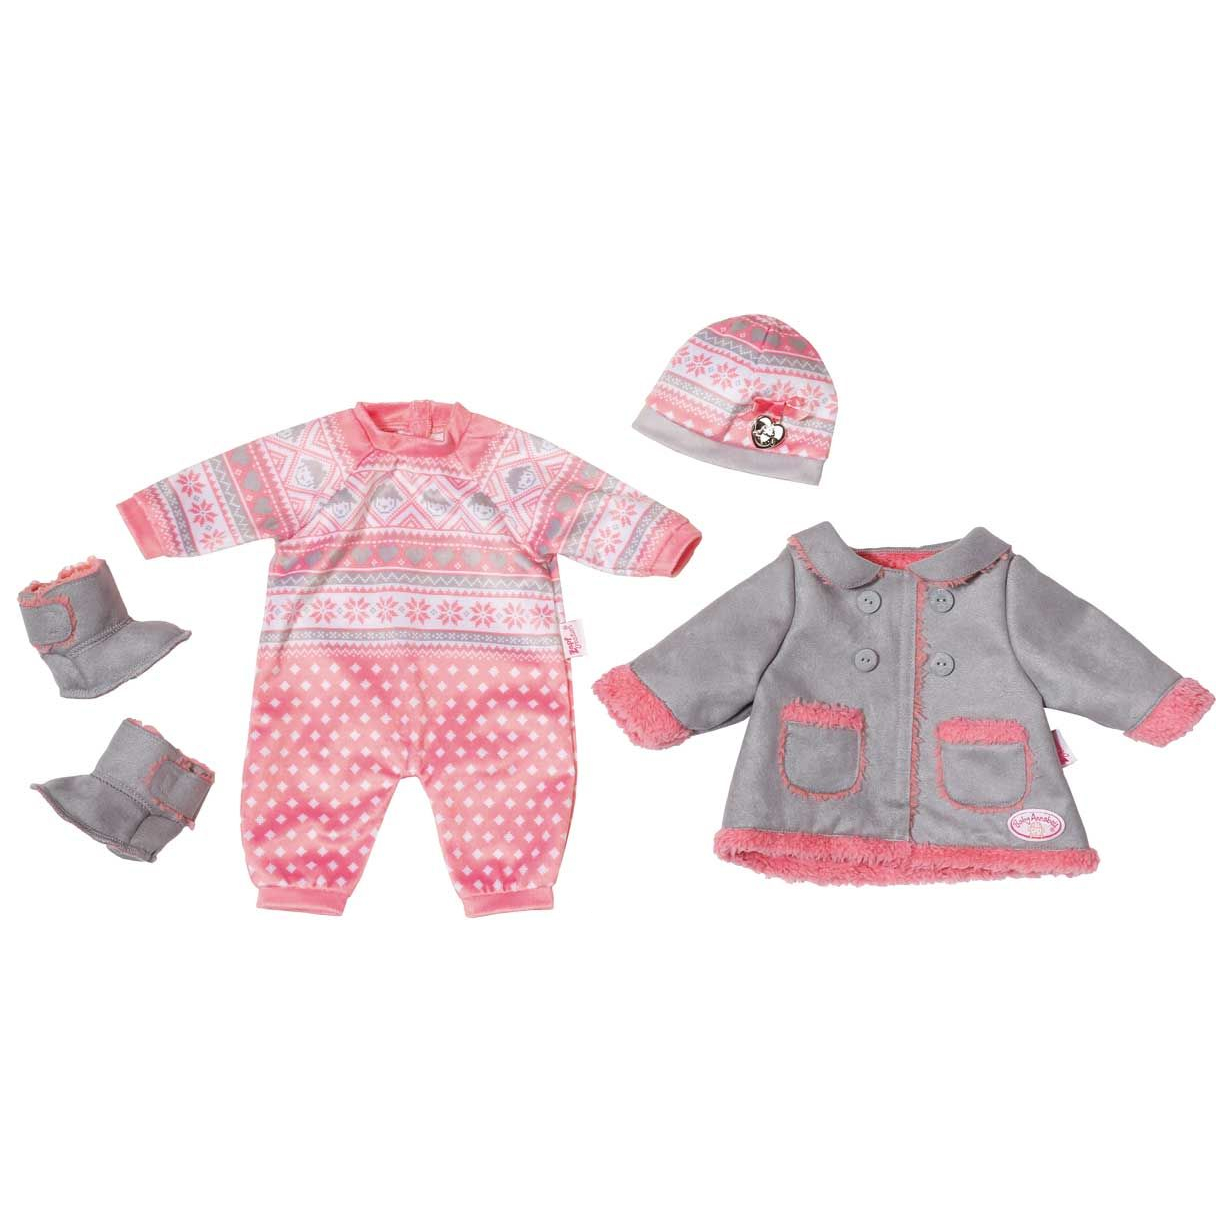 Набор одежды Baby Annabell Для прохладной погоды